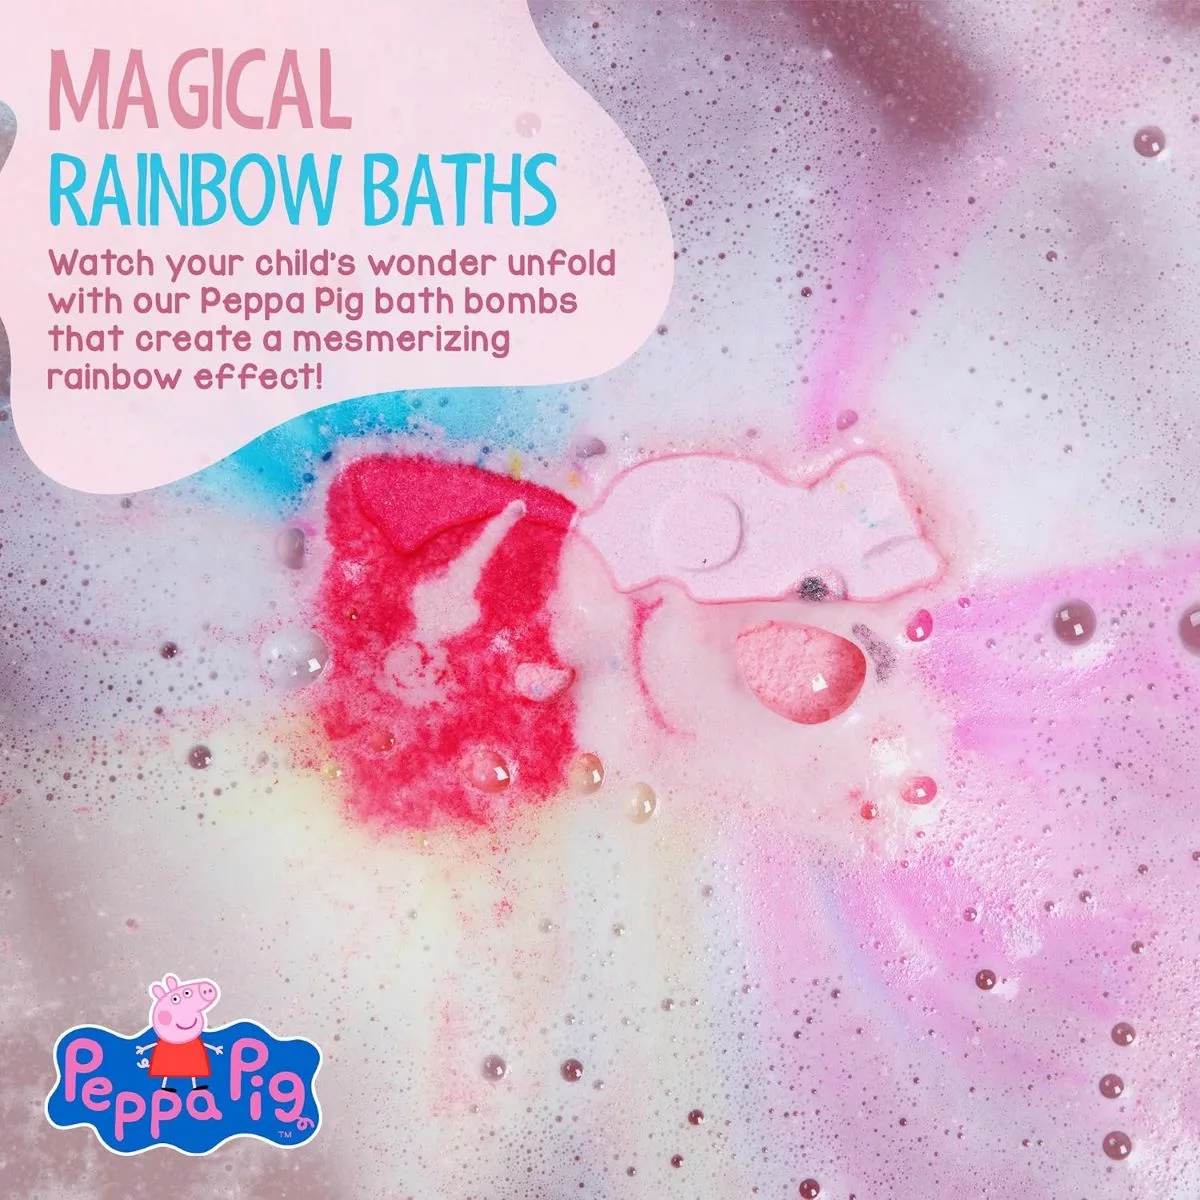 Peppa Pig Bath Bombs for Kids